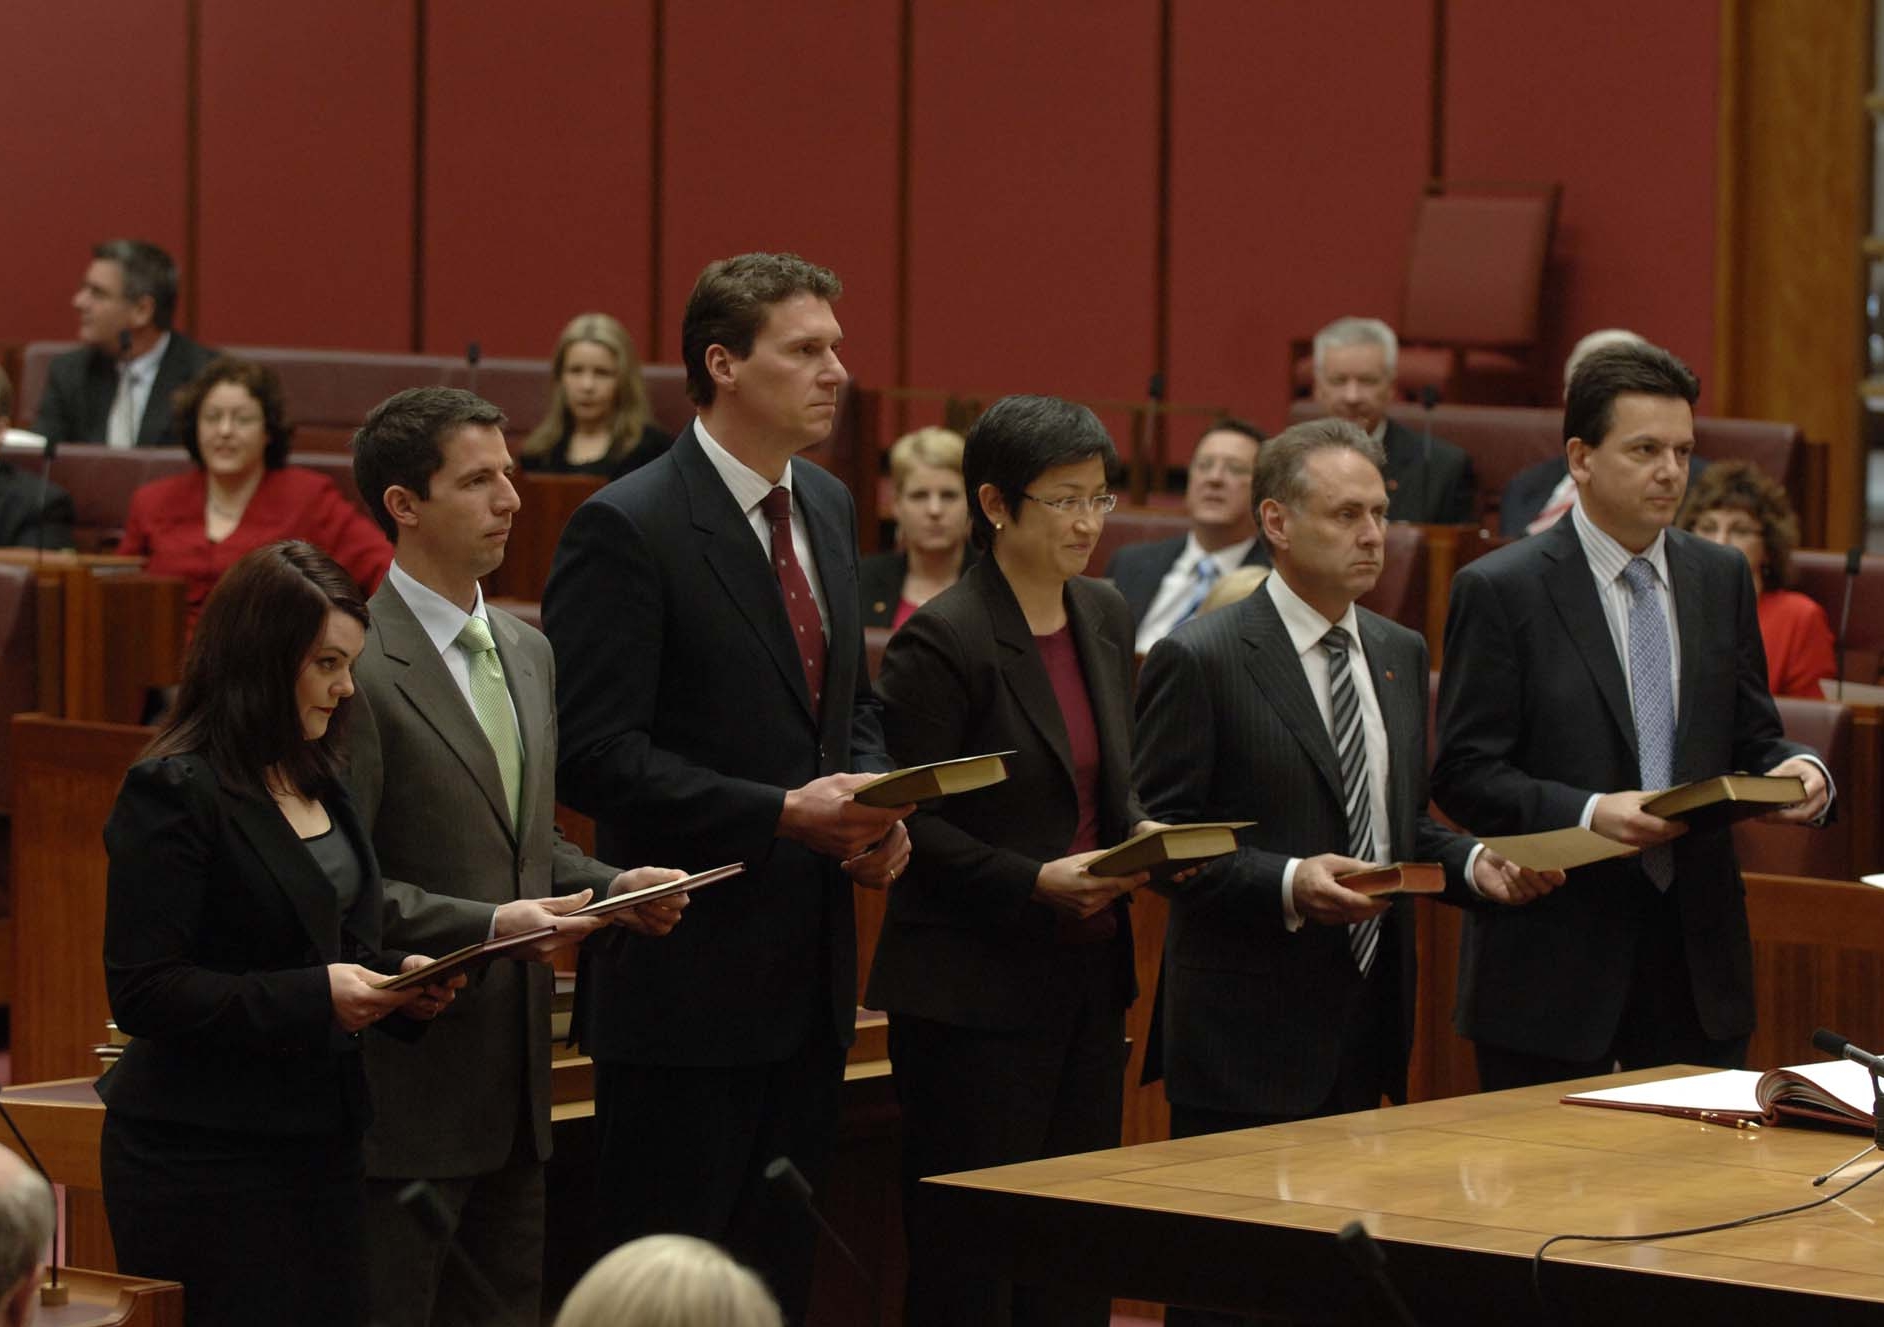 Swearing-in of Senators. Photo: Flickr / GreensMP CC